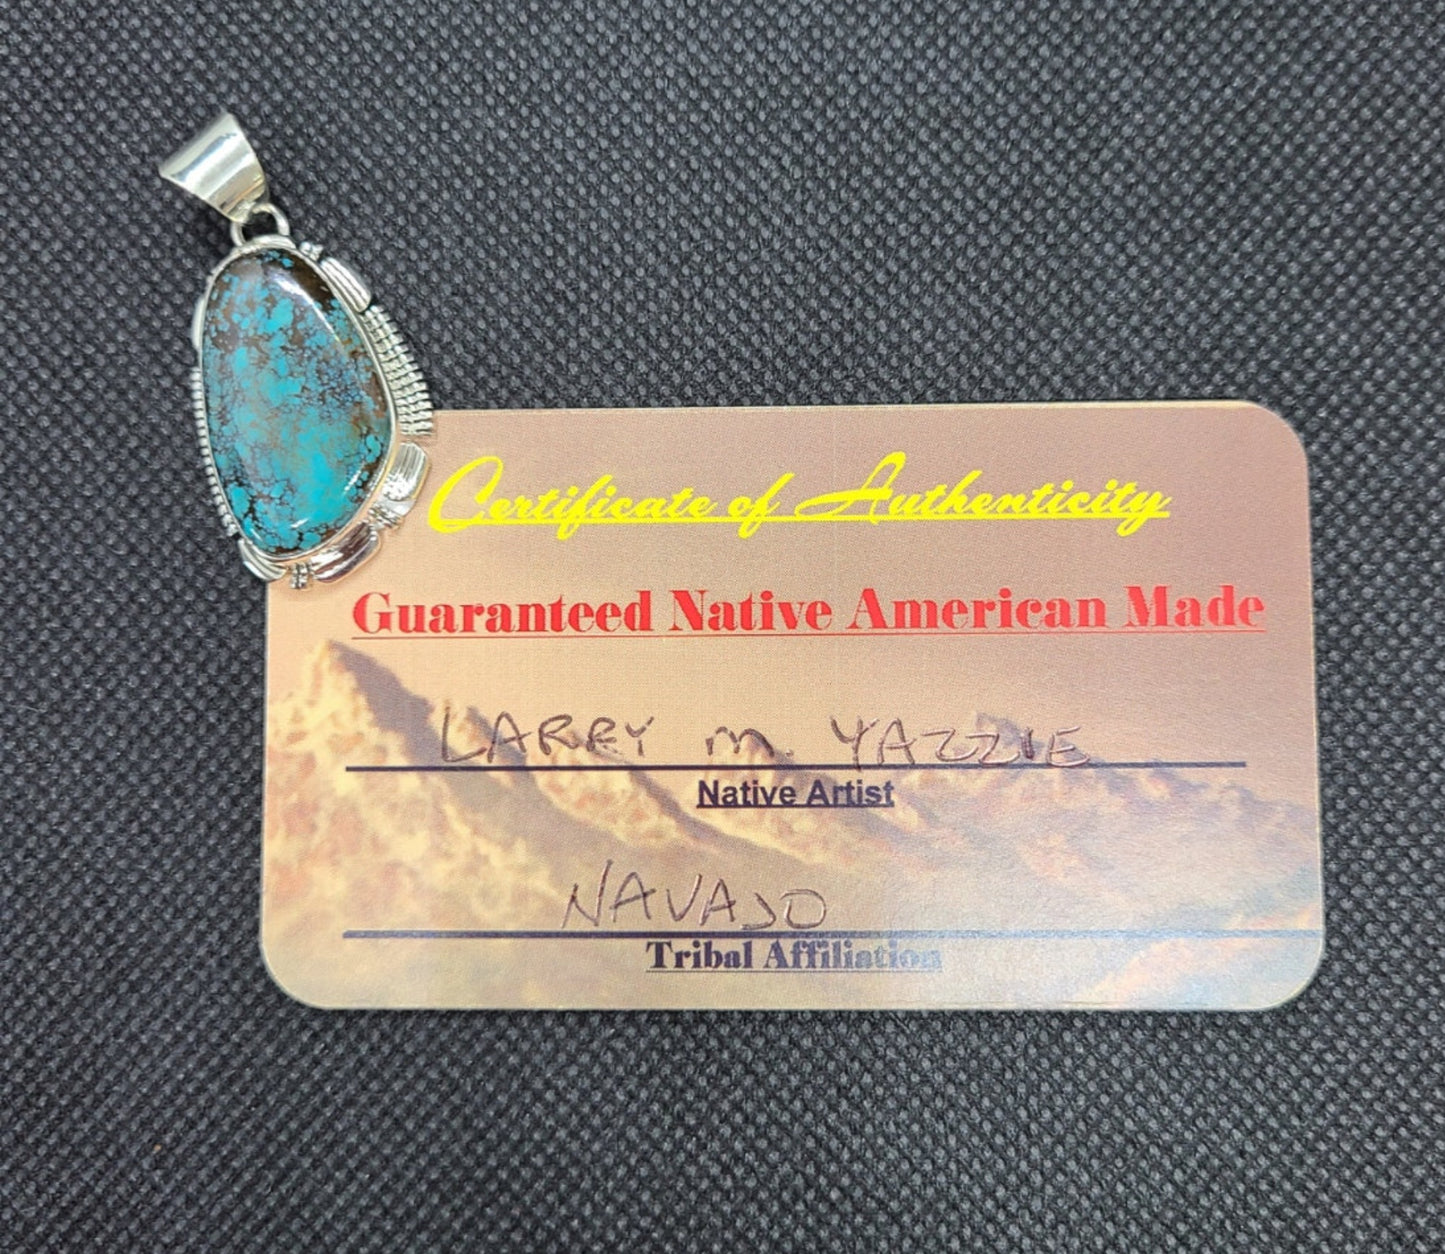 Bisbee Turquoise Pendant, Rare Stone, Navajo Artist, Larry M. Yazzie